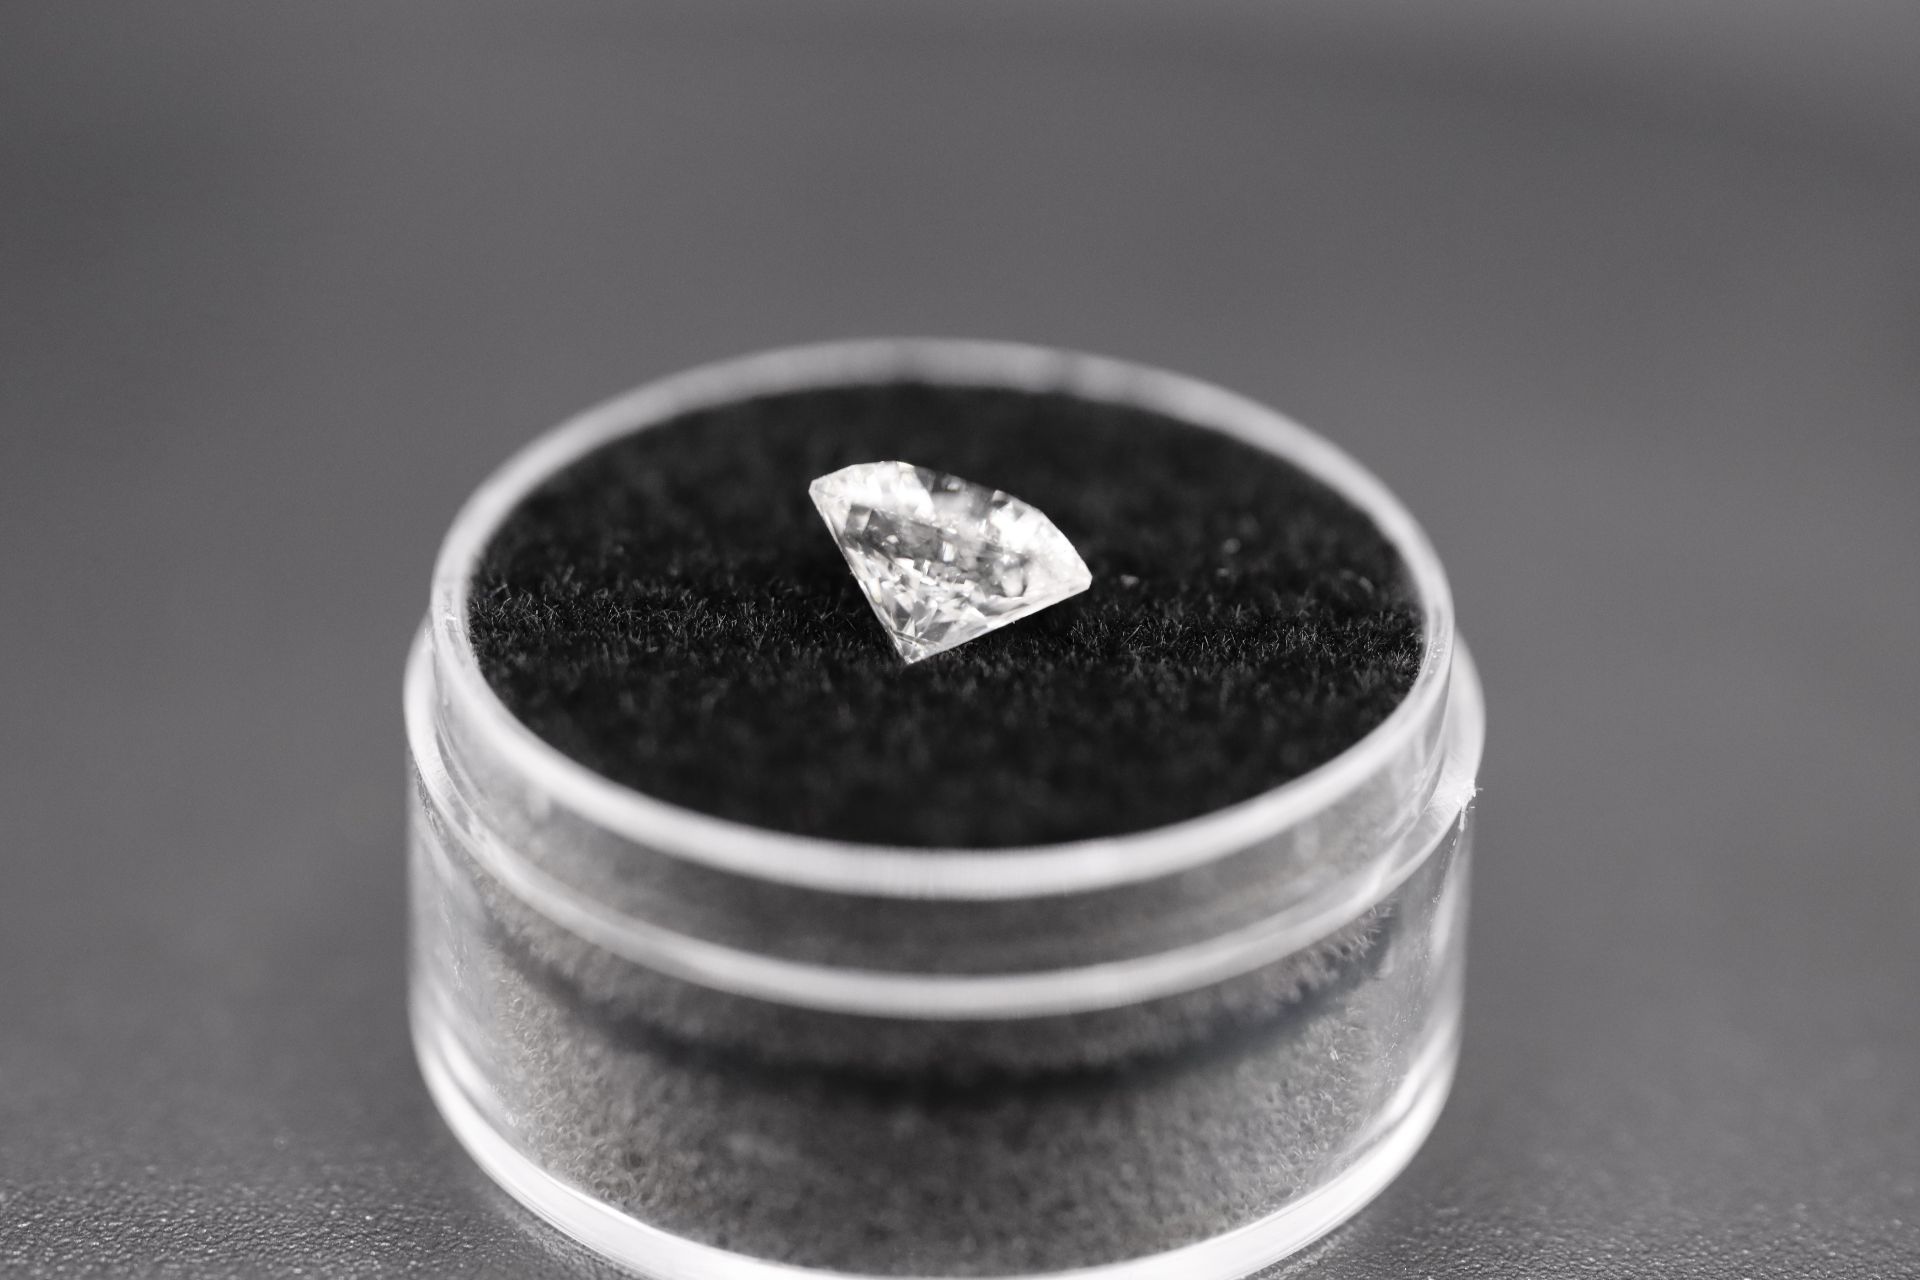 Round Brilliant Cut Natural Diamond 2.01 Carat Colour D Clarity VS1 - DGI Certificate - Image 23 of 24